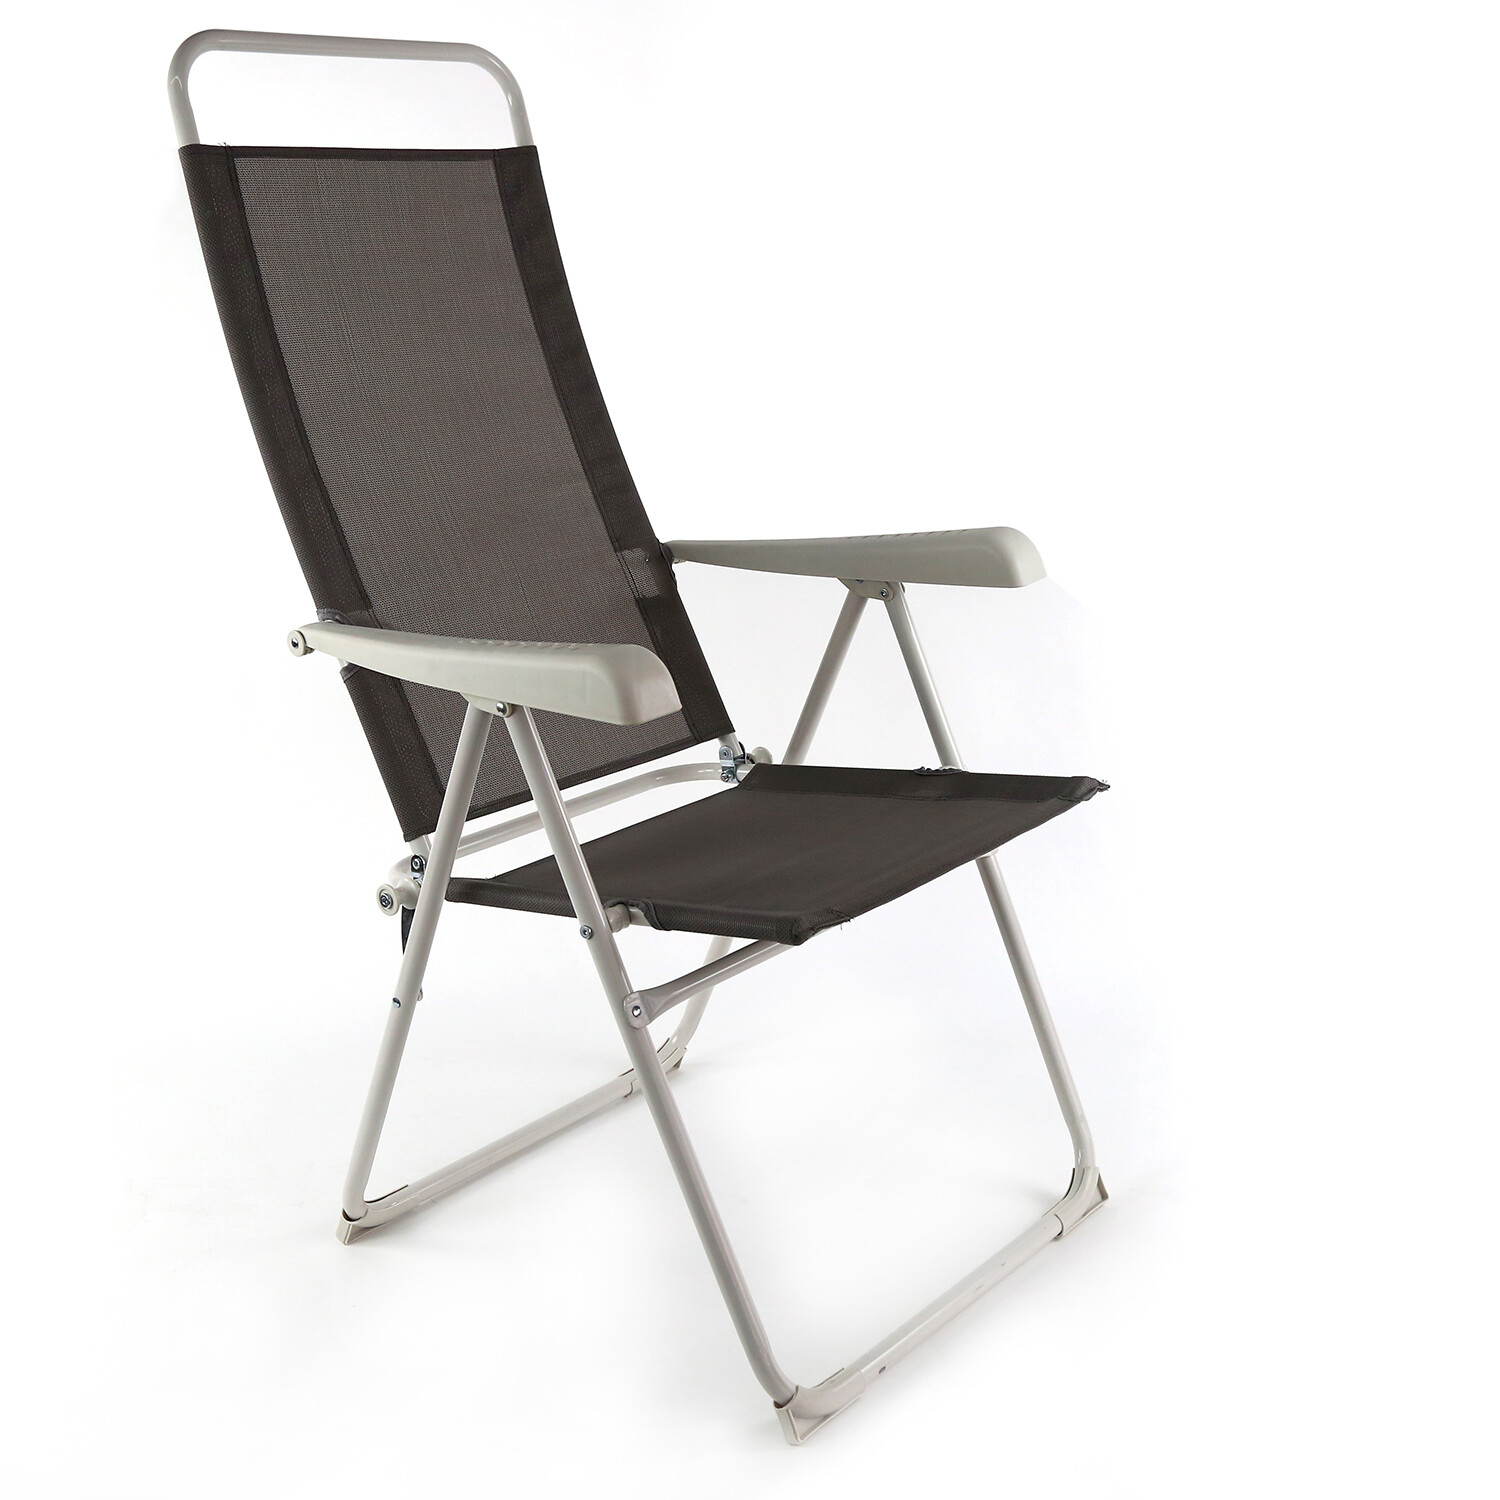 Active Sport Folding Chair - Dark grey Image 1